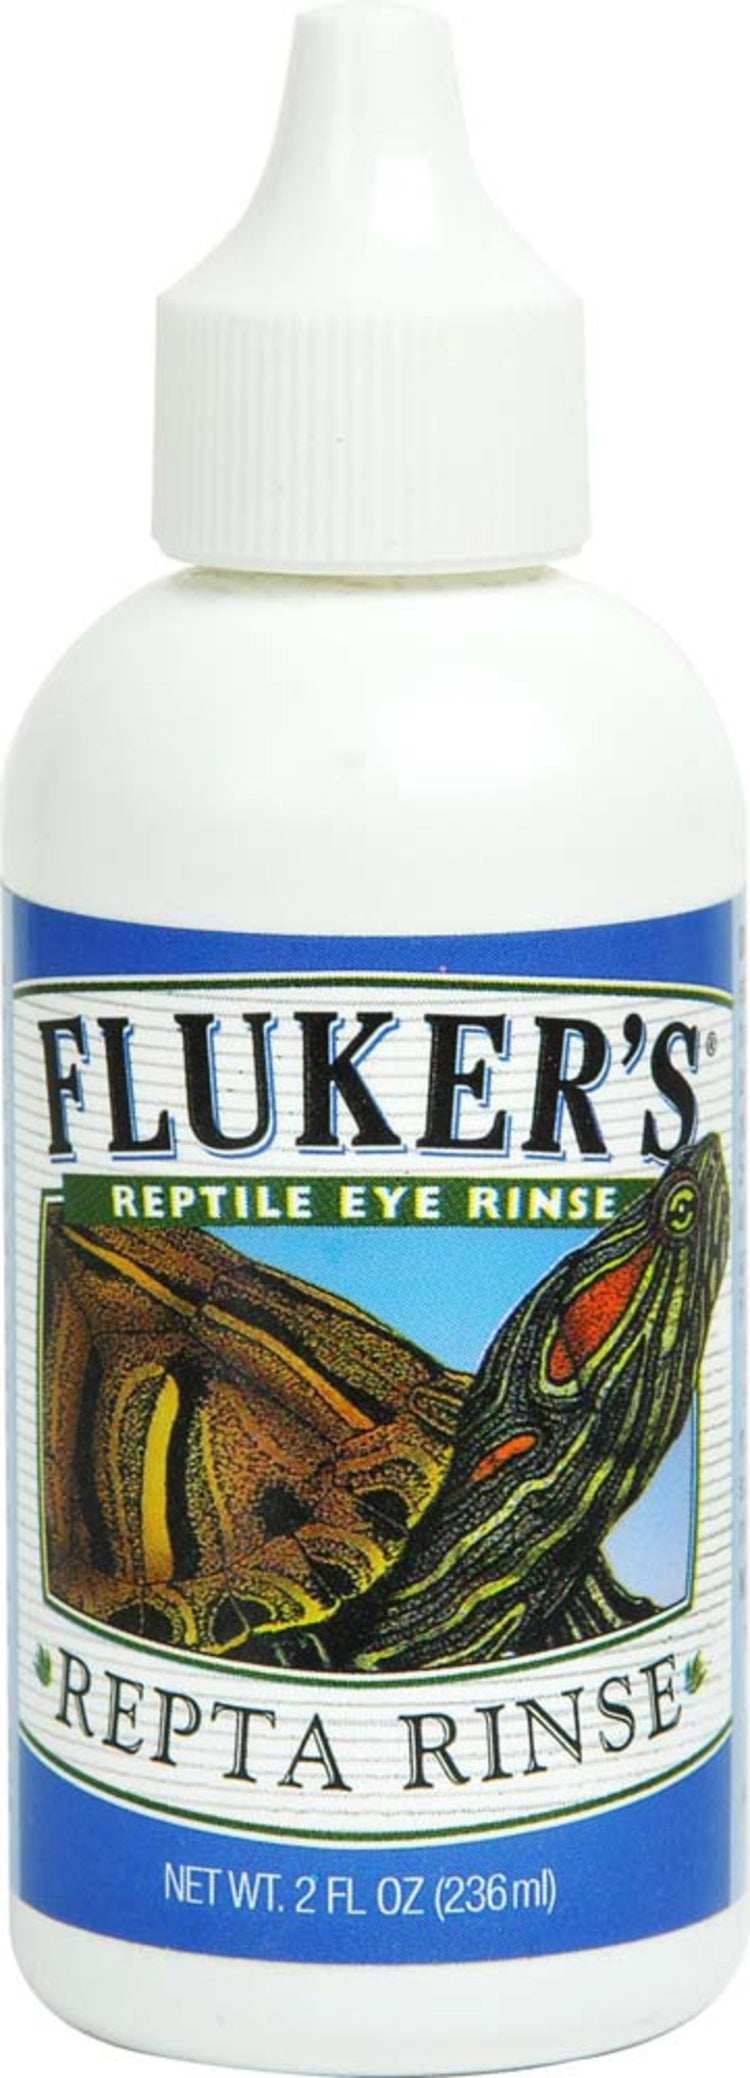 Fluker's Repta-Rinse